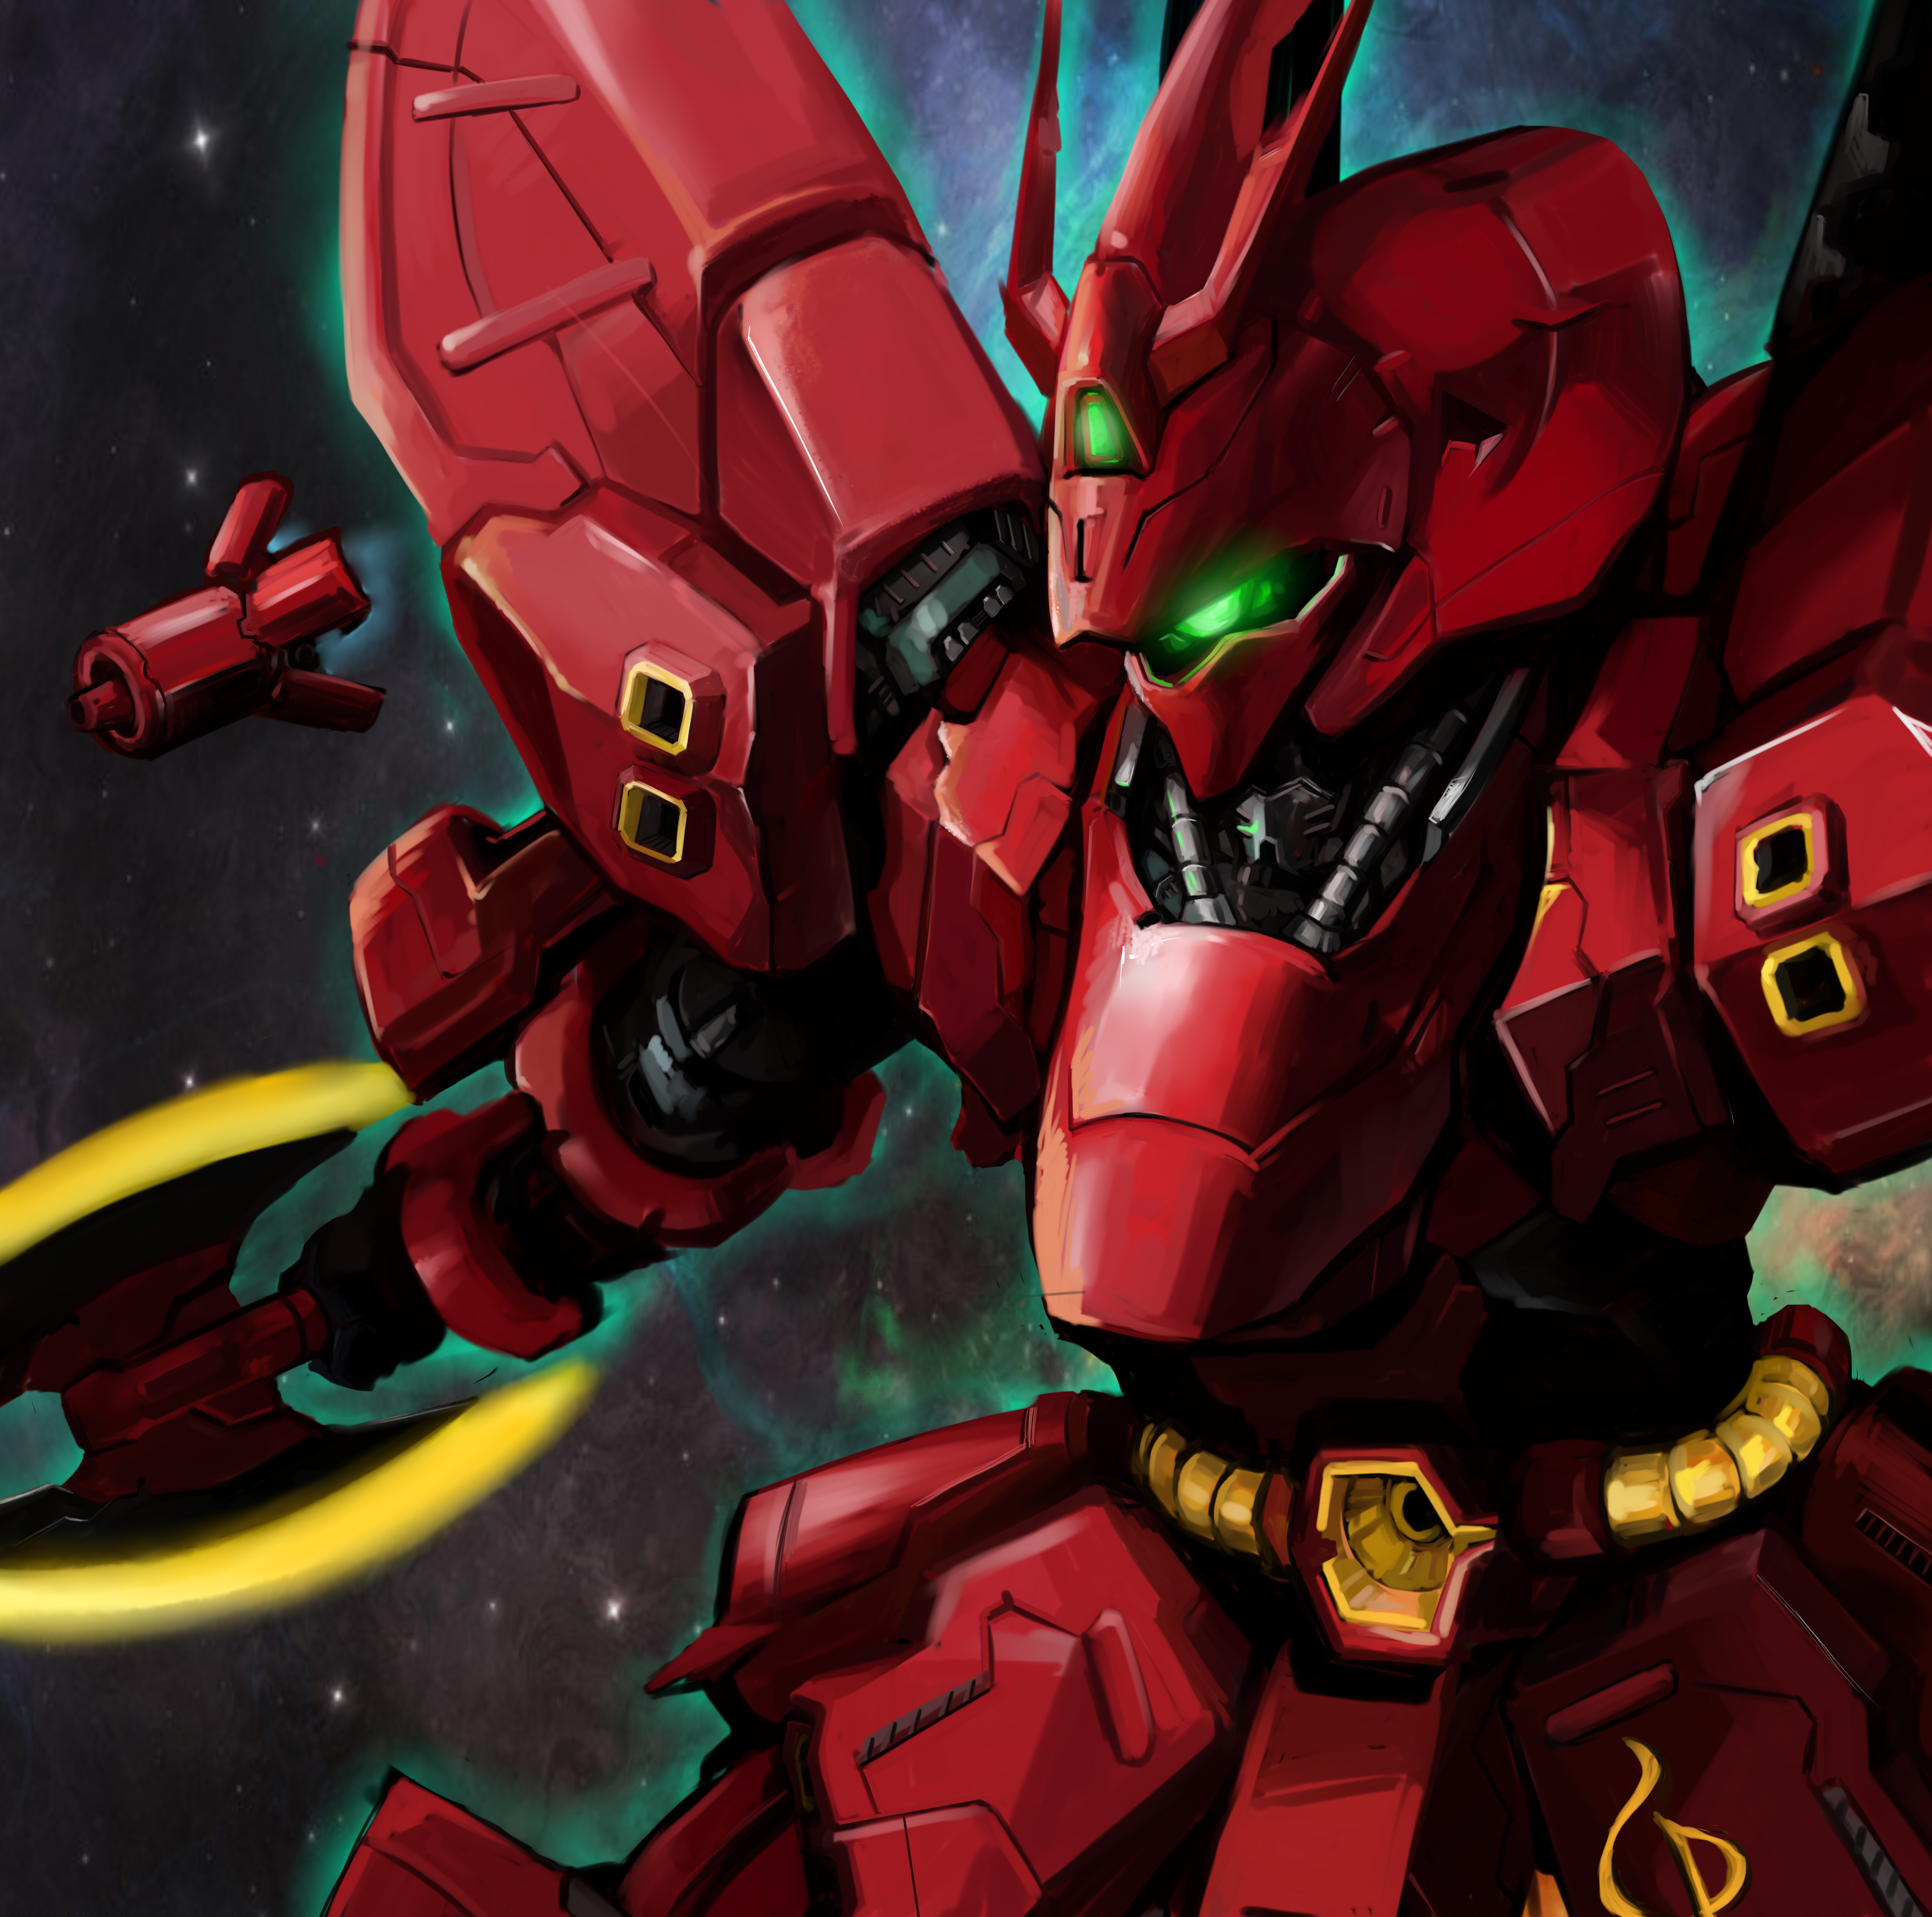 Anime 5000x4960 anime mechs Mobile Suit Gundam Char&#039;s Counterattack Sazabi Mobile Suit artwork digital art fan art Super Robot Taisen